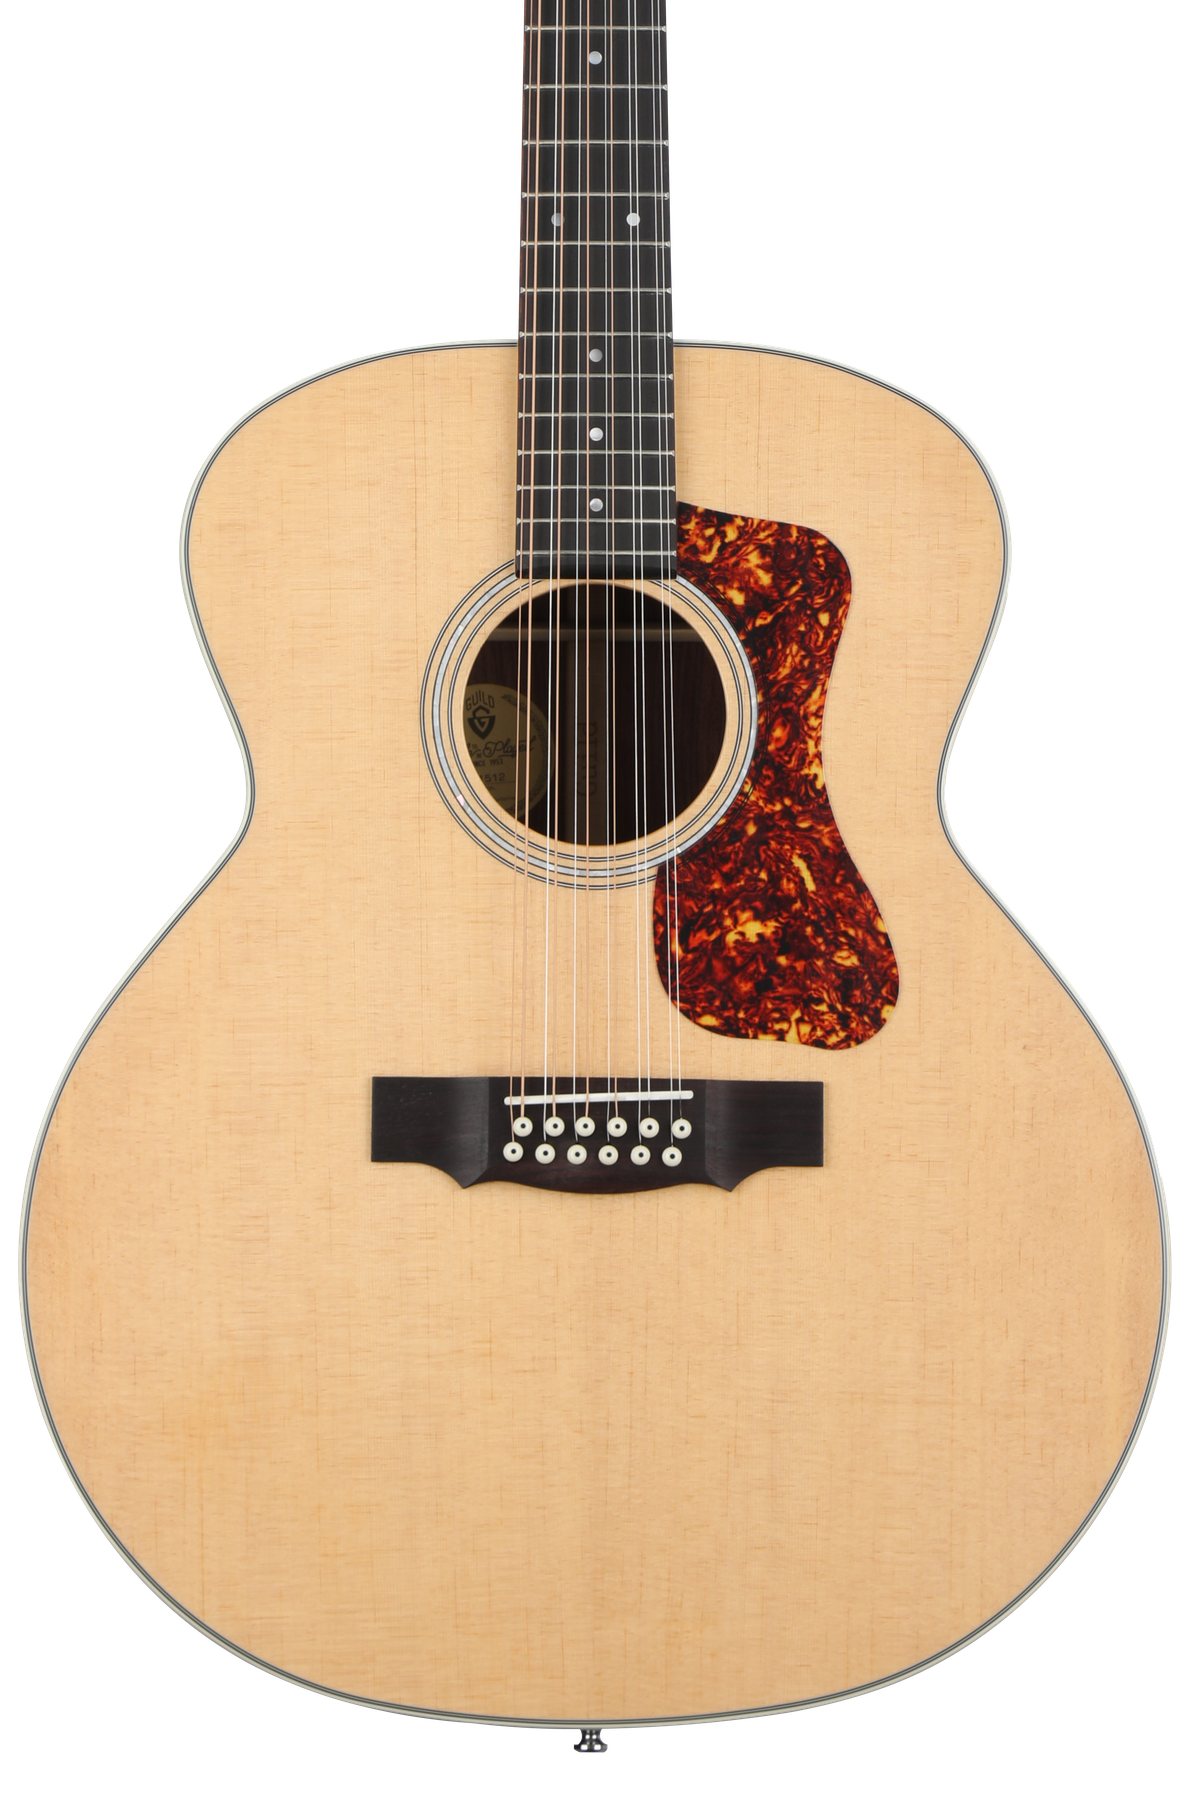 Guild F-1512 Jumbo 12-string Acoustic Guitar - Natural